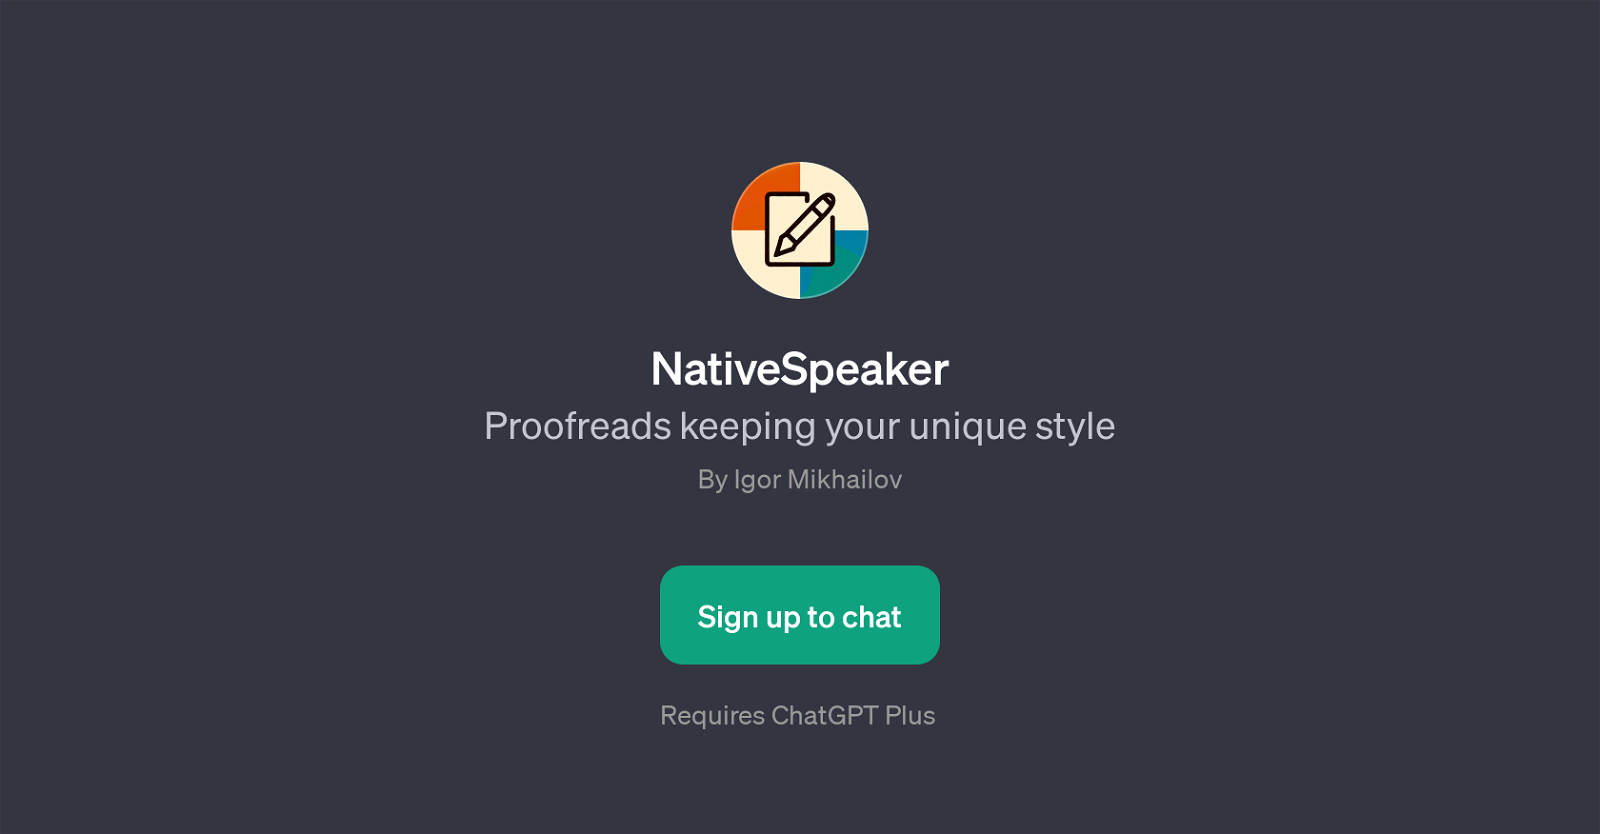 NativeSpeaker website